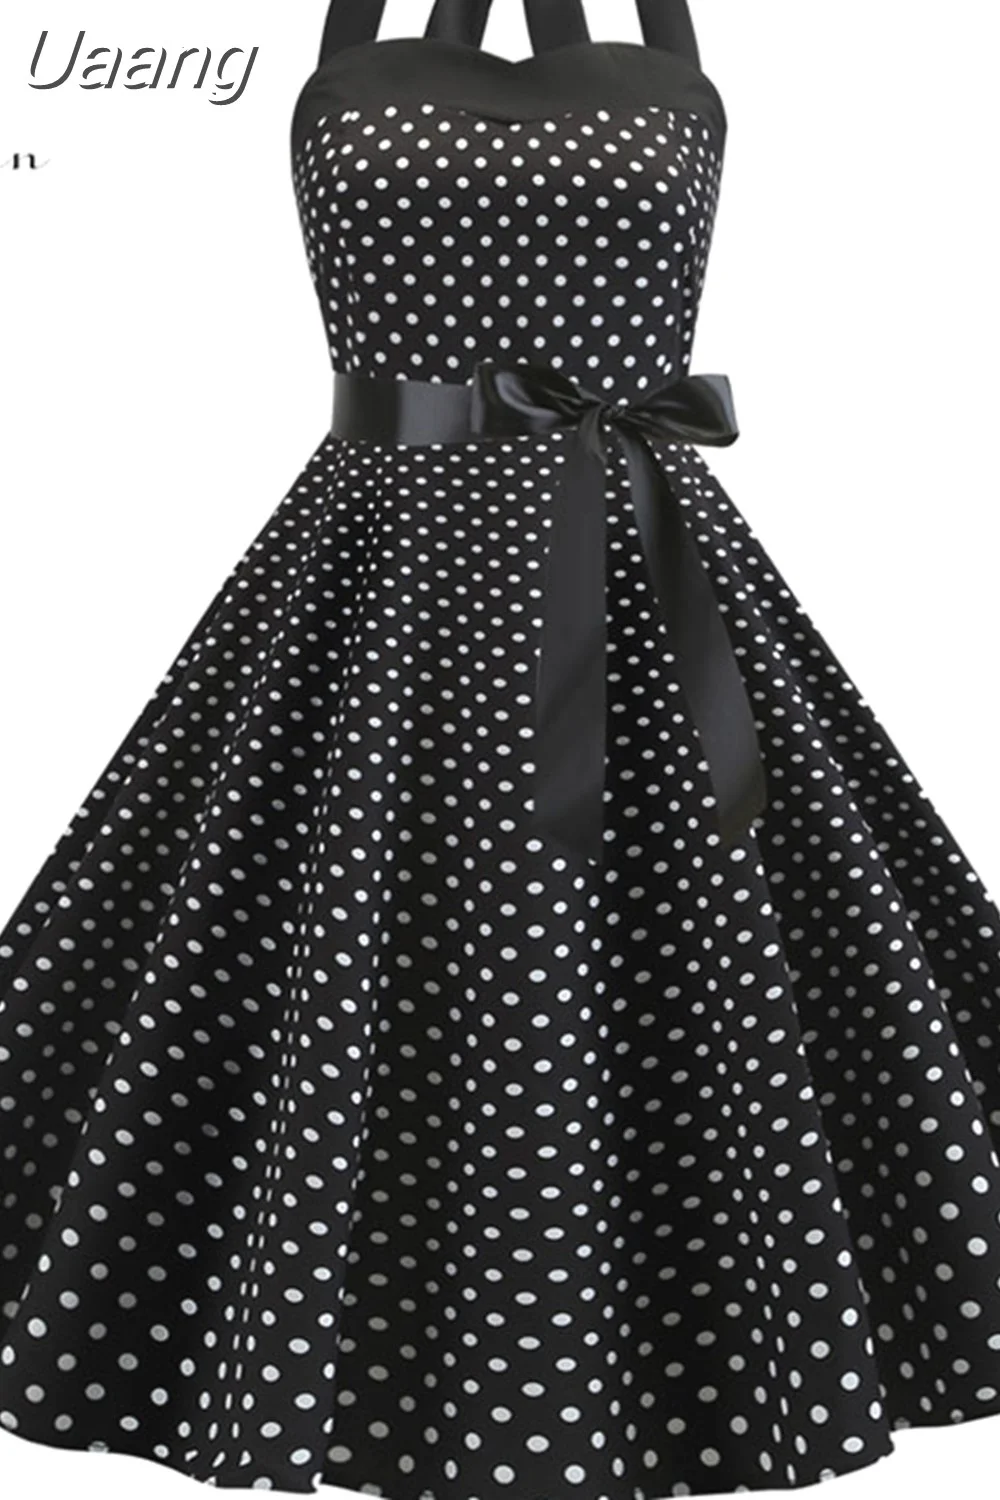 Uaang Polka Dot Halter Vintage Dress 50s 60s Gothic Pin Up Rockabilly Dress Robe Femme Sexy Retro Party Dress